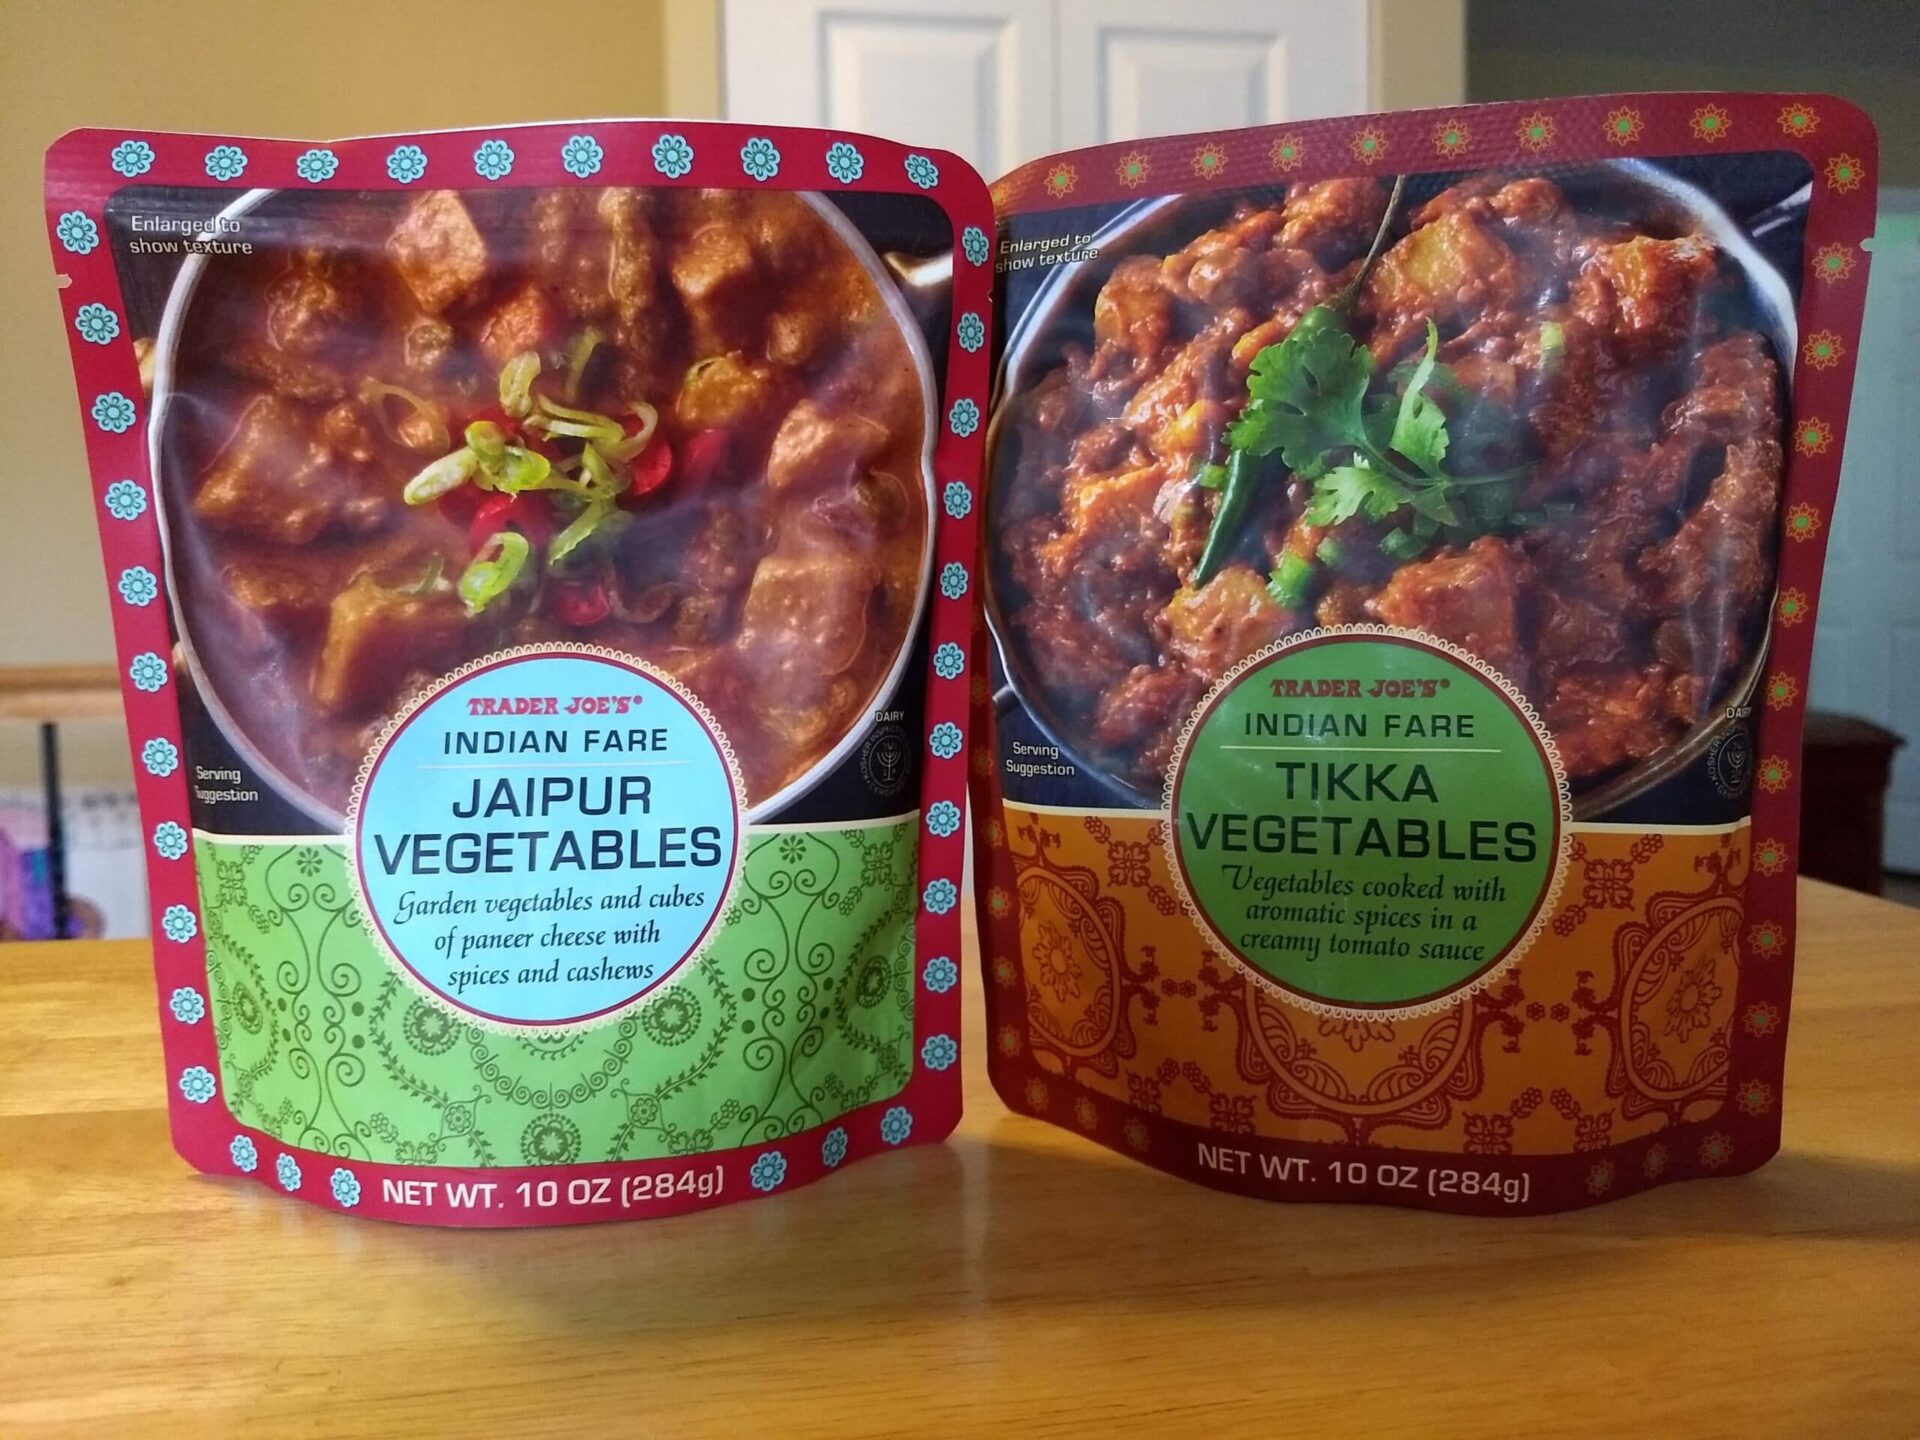 Tikka Vegetables and Jaipur Vegetables